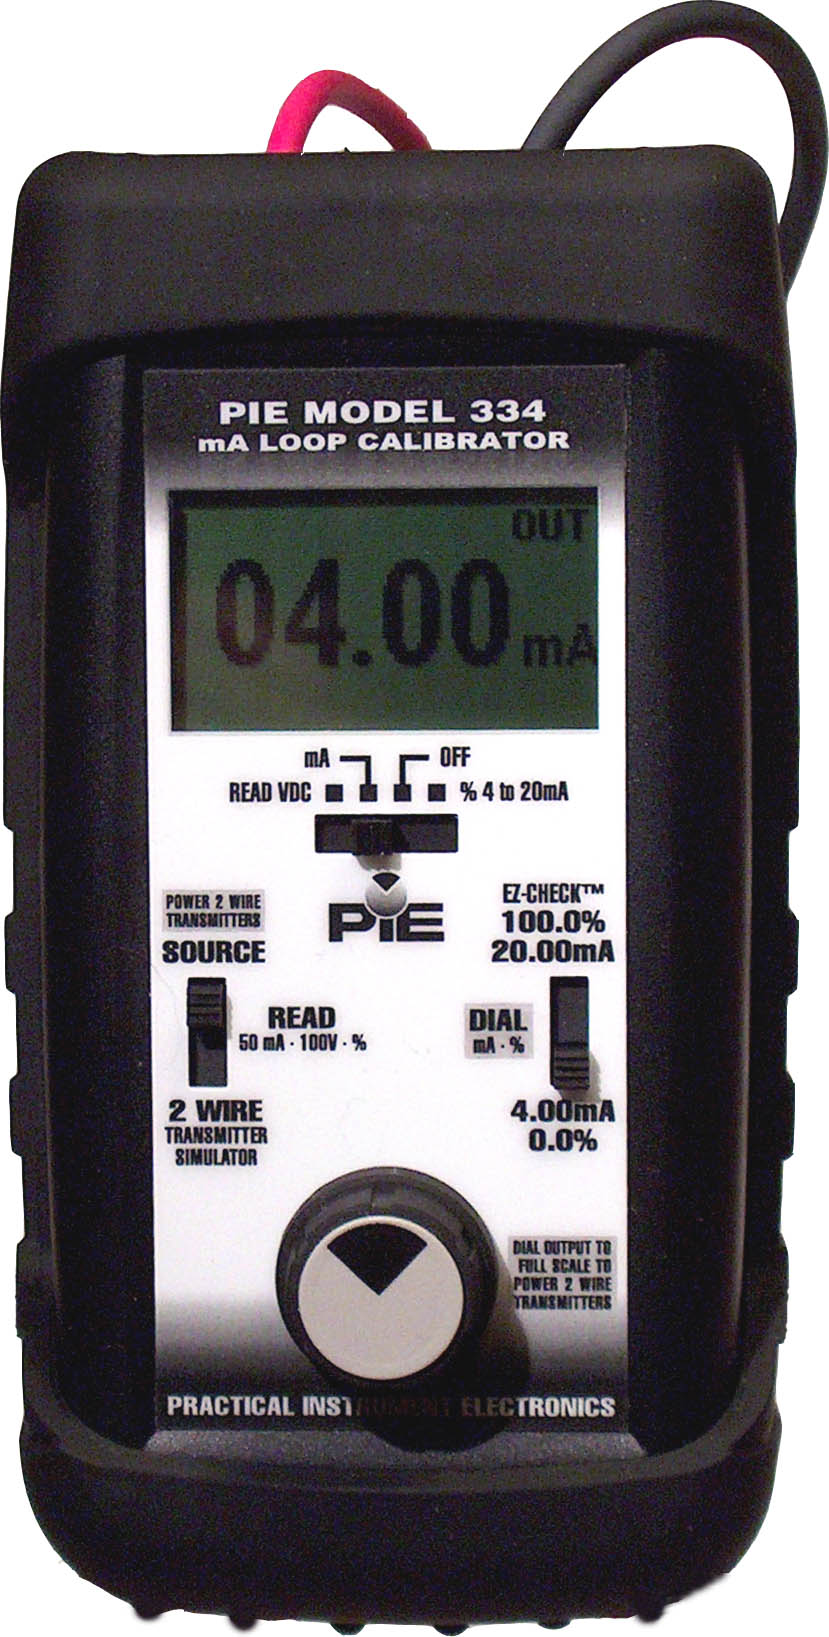 334 mA Loop Calibrator